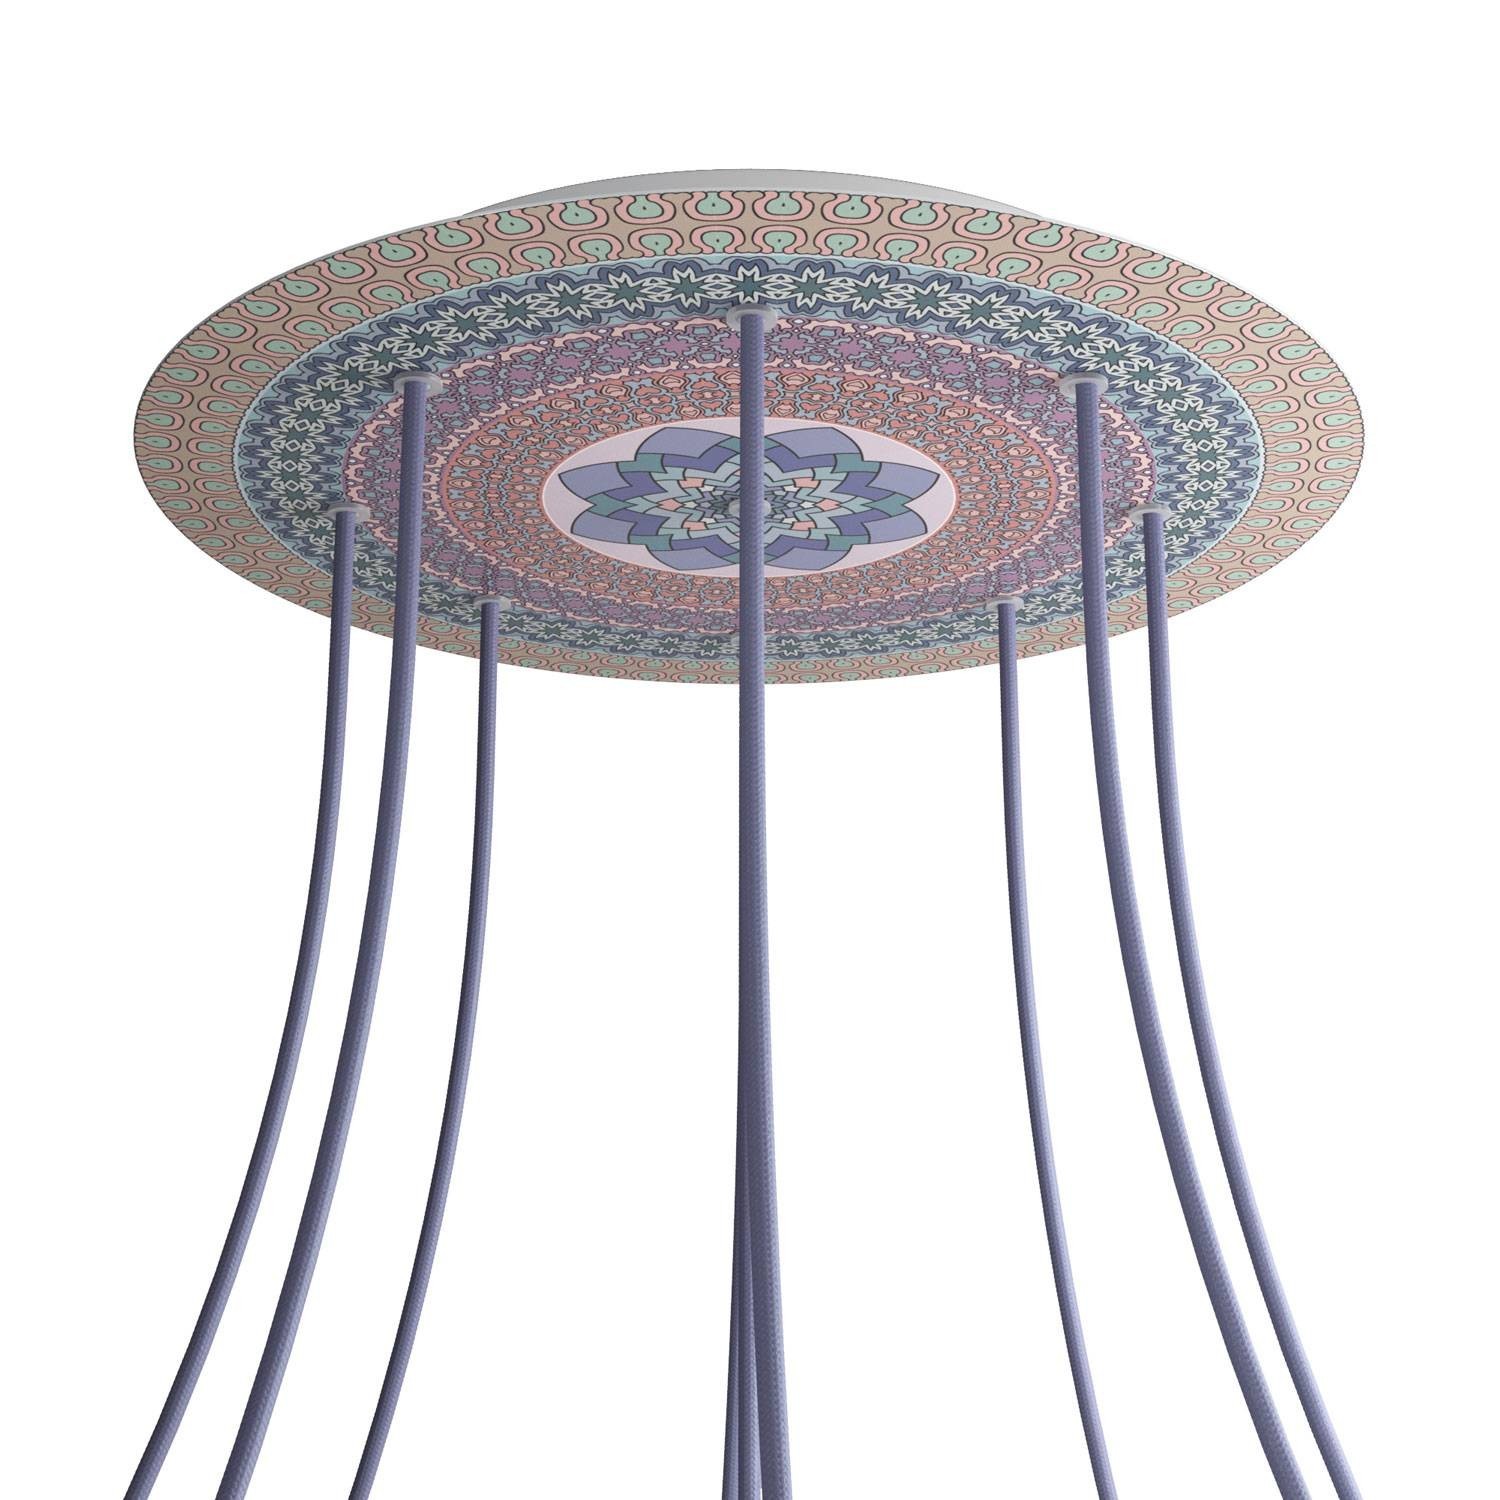 Velika okrugla dekoracija za stropnu rozetu 400 mm - Rose-One sistem s 9 rupa i 4 bočne rupe - PROMO